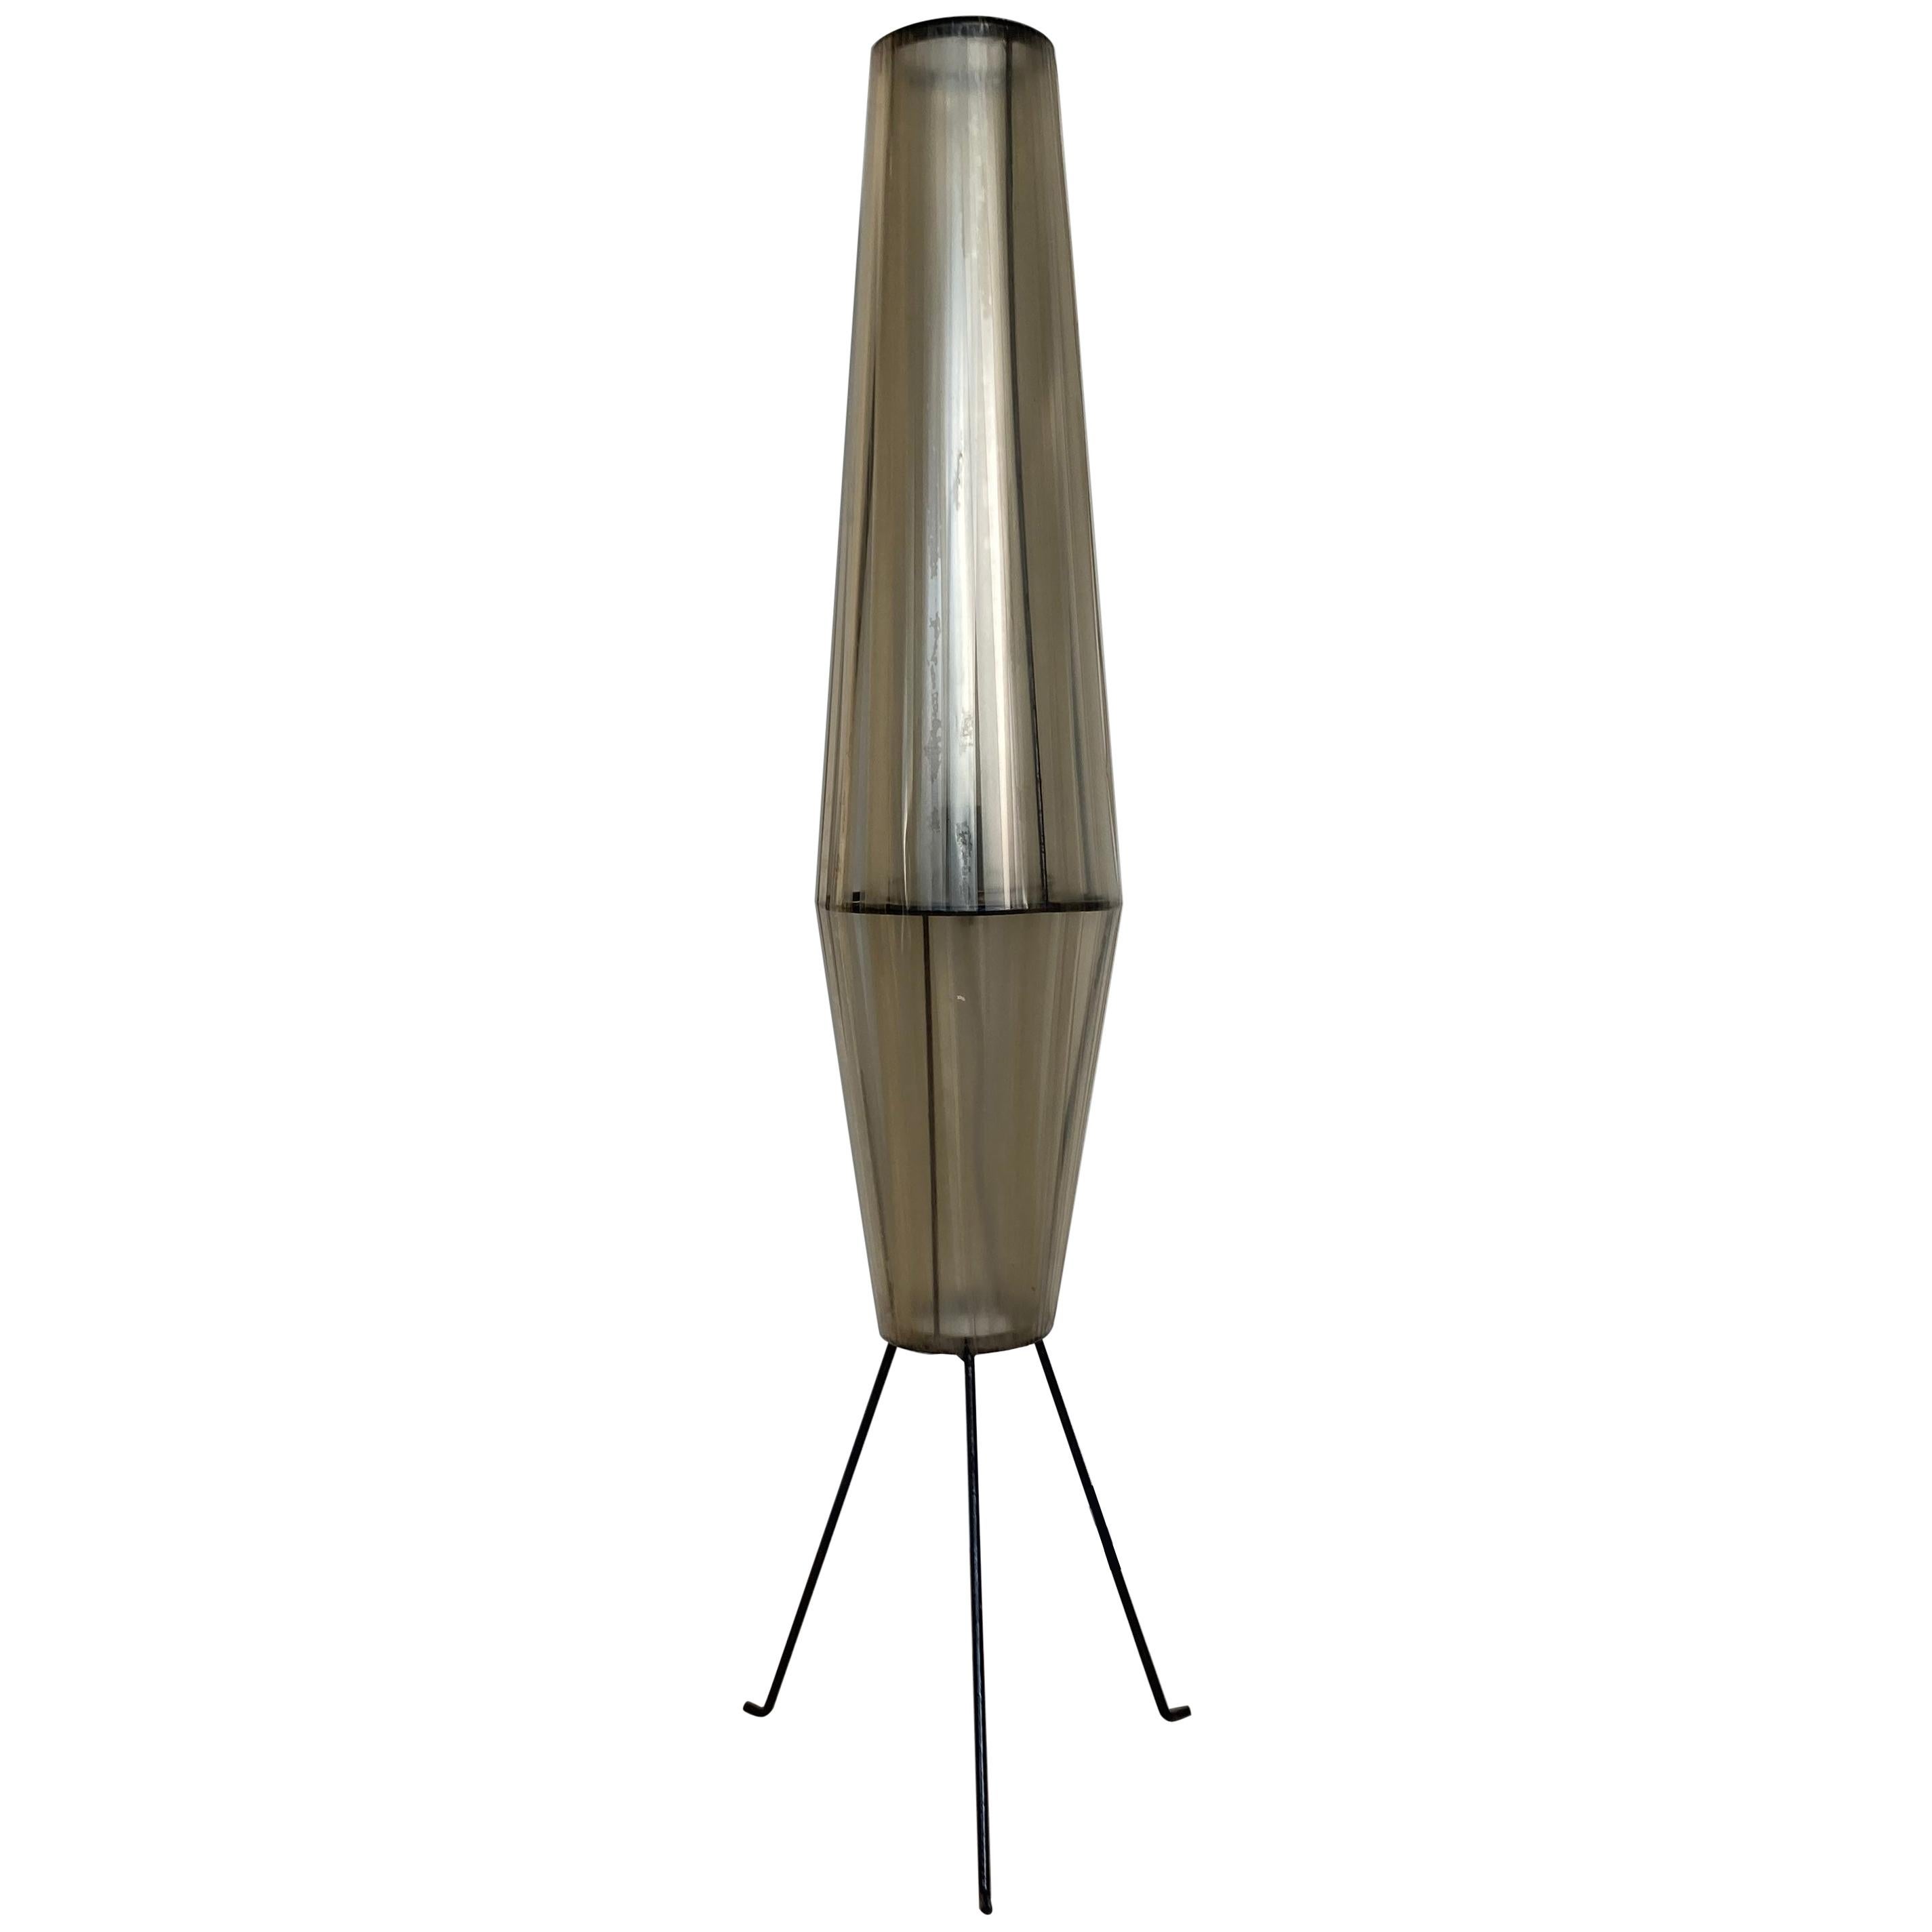 Midcentury Space Age Floor Lamp "Rocket", Czechoslovakia, 1960s